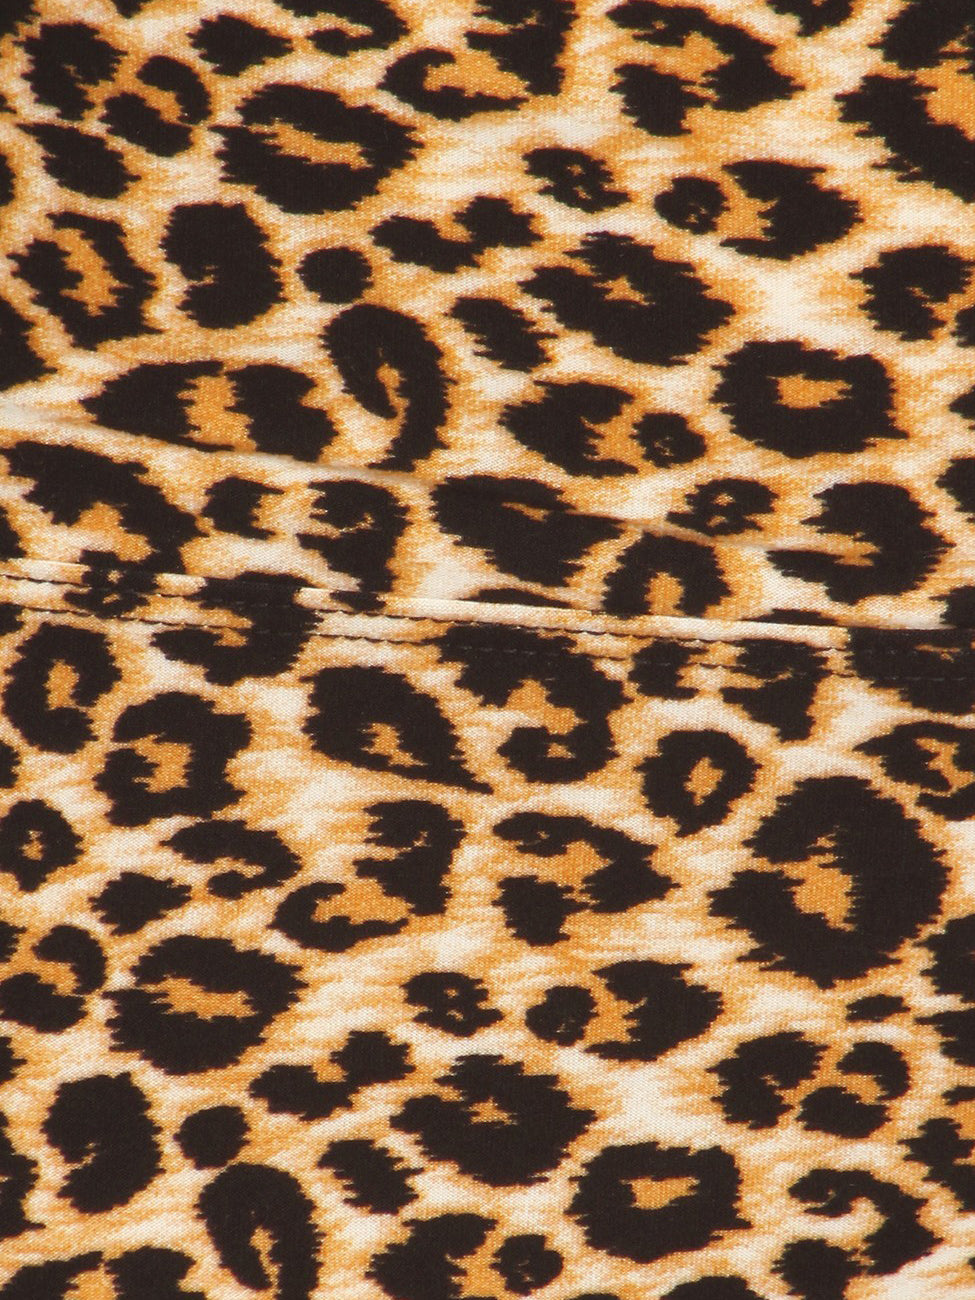 Zeema Microfiber Plus Size Legging in Leopard